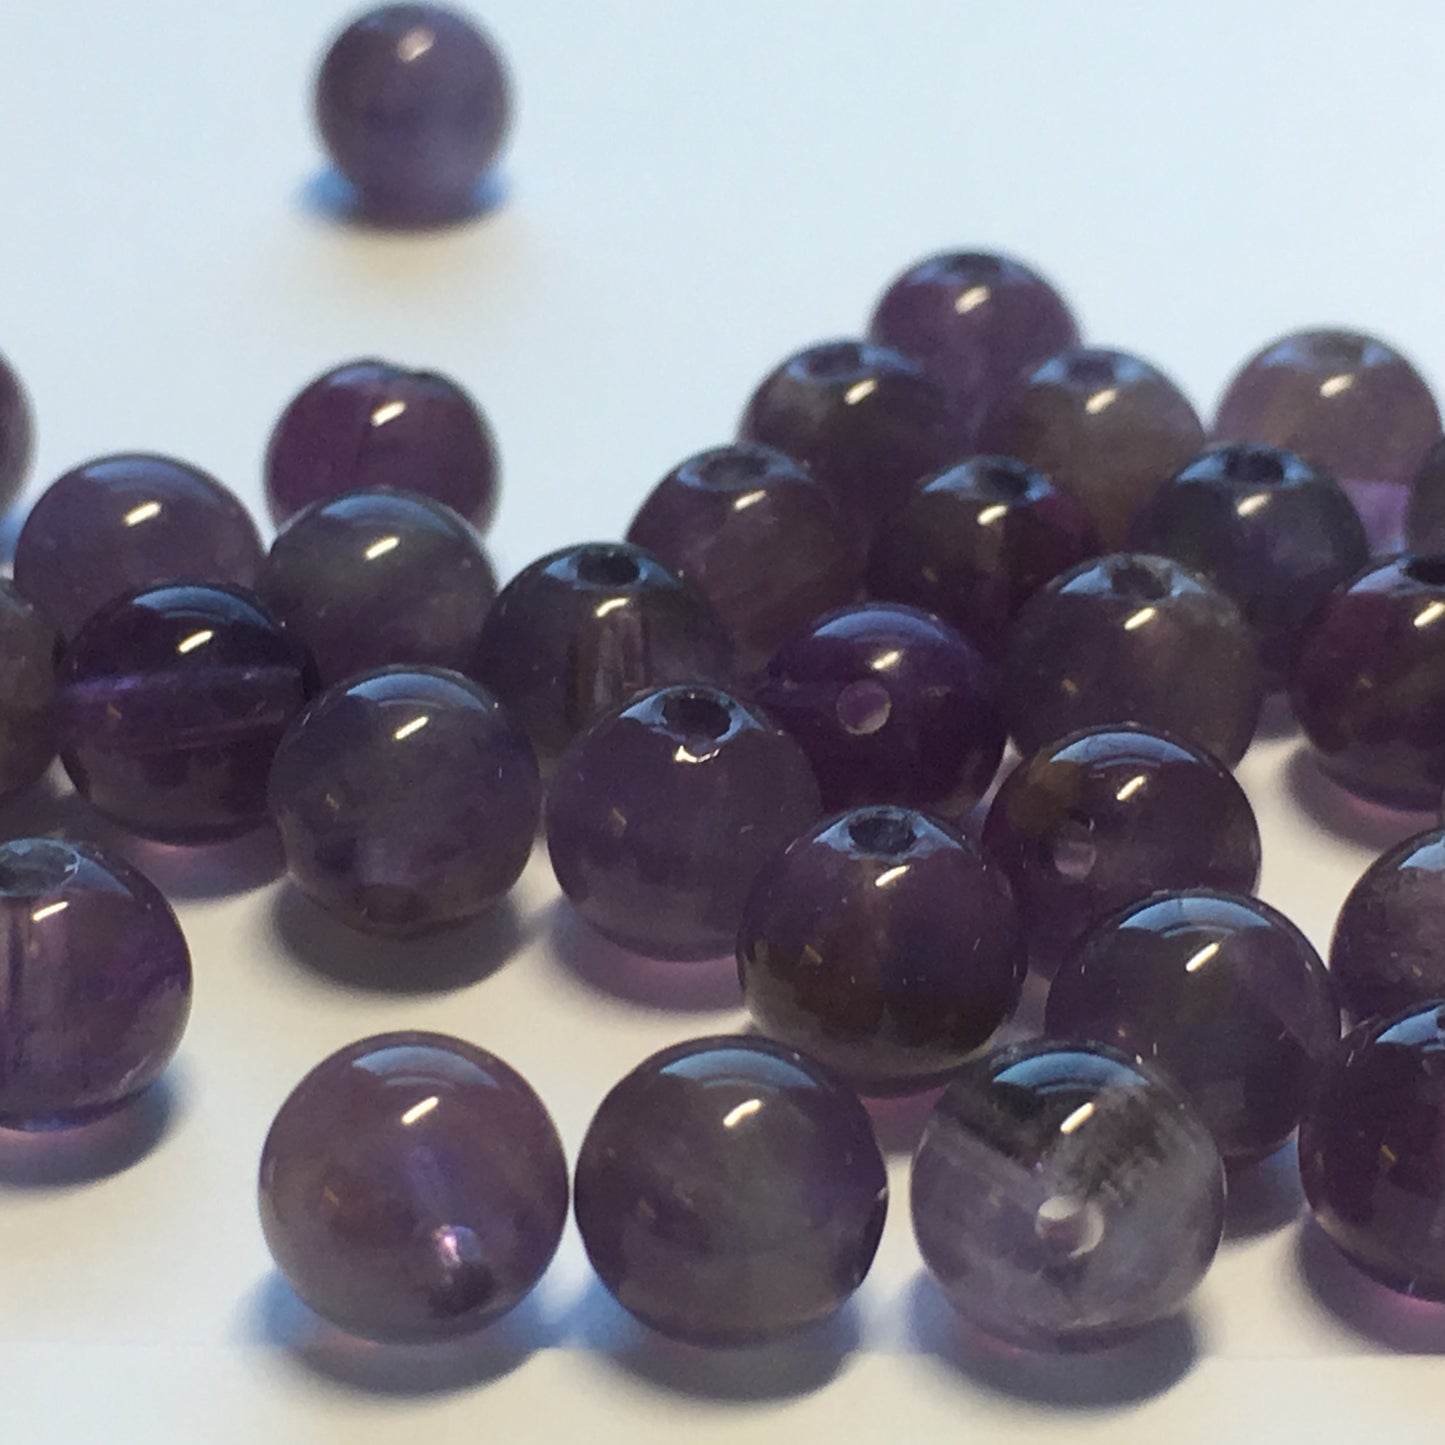 Light Amethyst Round Semi-Precious Stone Beads, 6 mm, 36 Beads